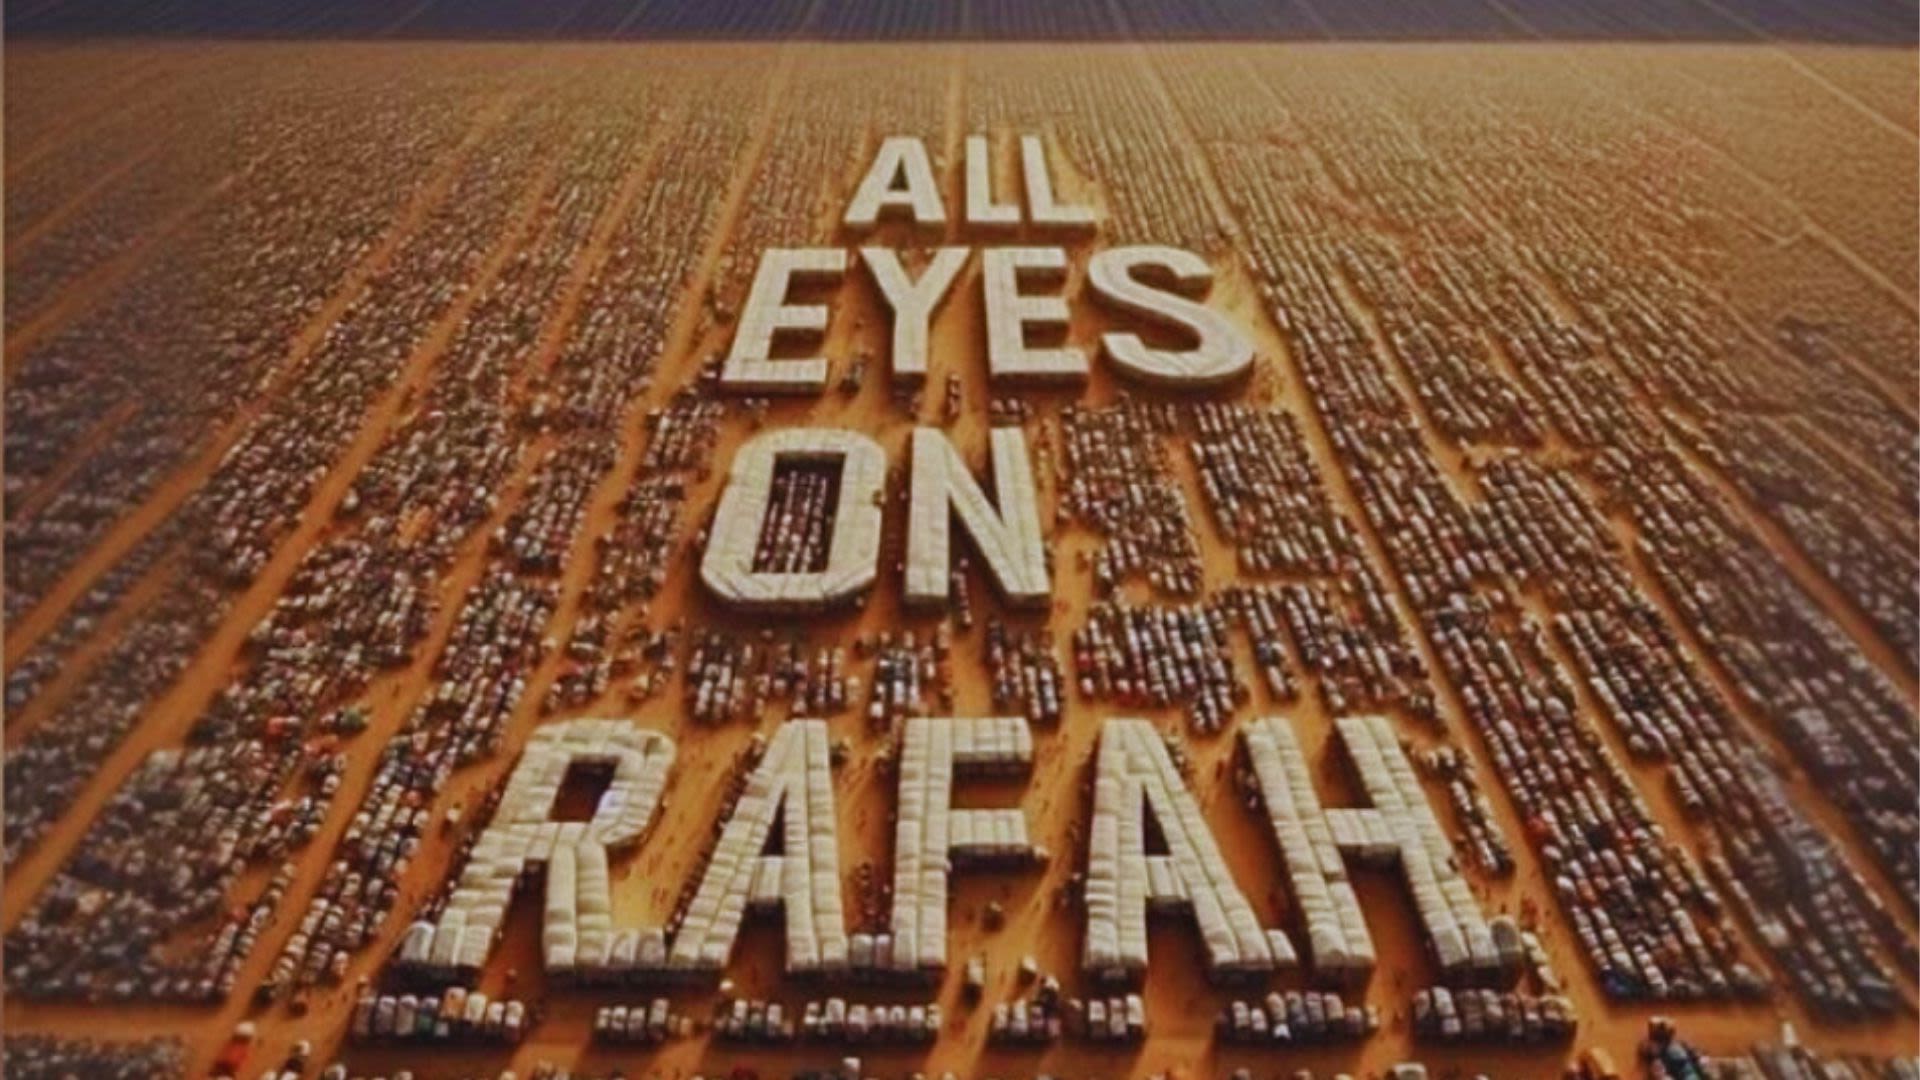 ‘All Eyes on Rafah’: 47-million share AI image, spark ethical debate